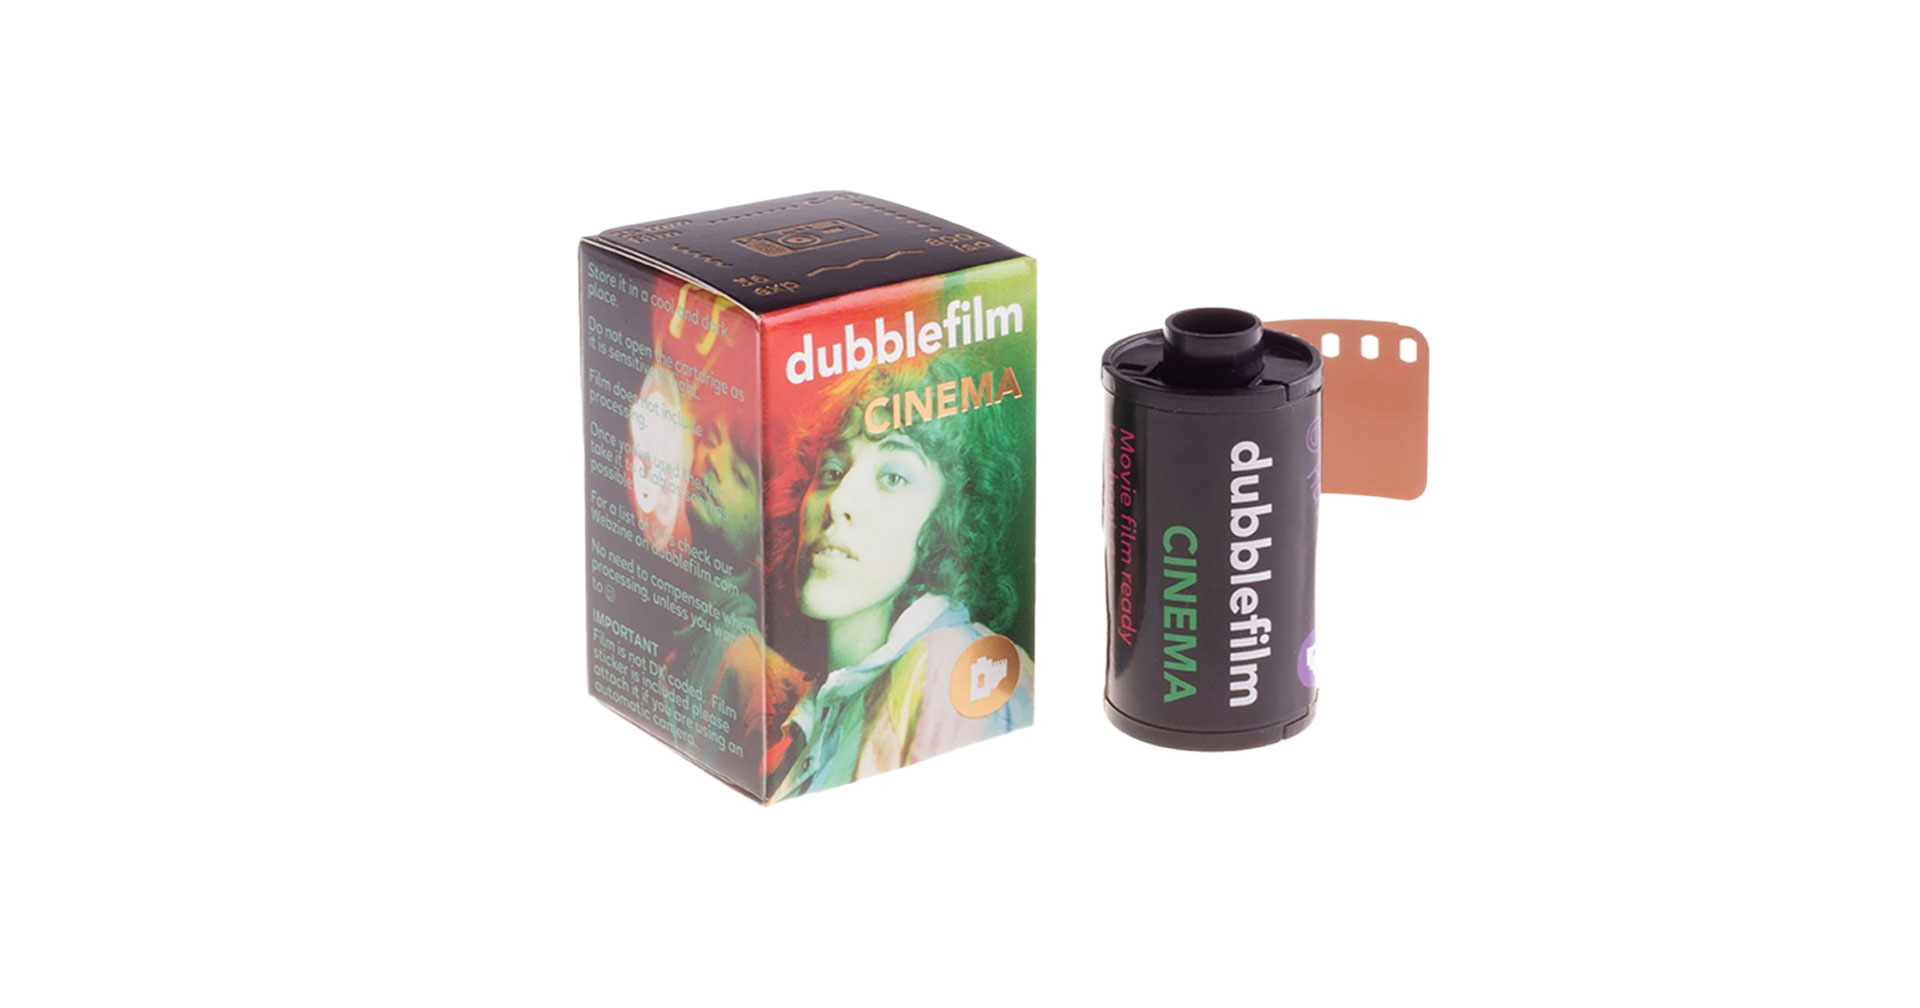 Dubblefilm เปิดตัวฟิล์มหนัง ‘CINEMA’ ISO 800 ให้โทนสีและ effect สไตล์ cinematic